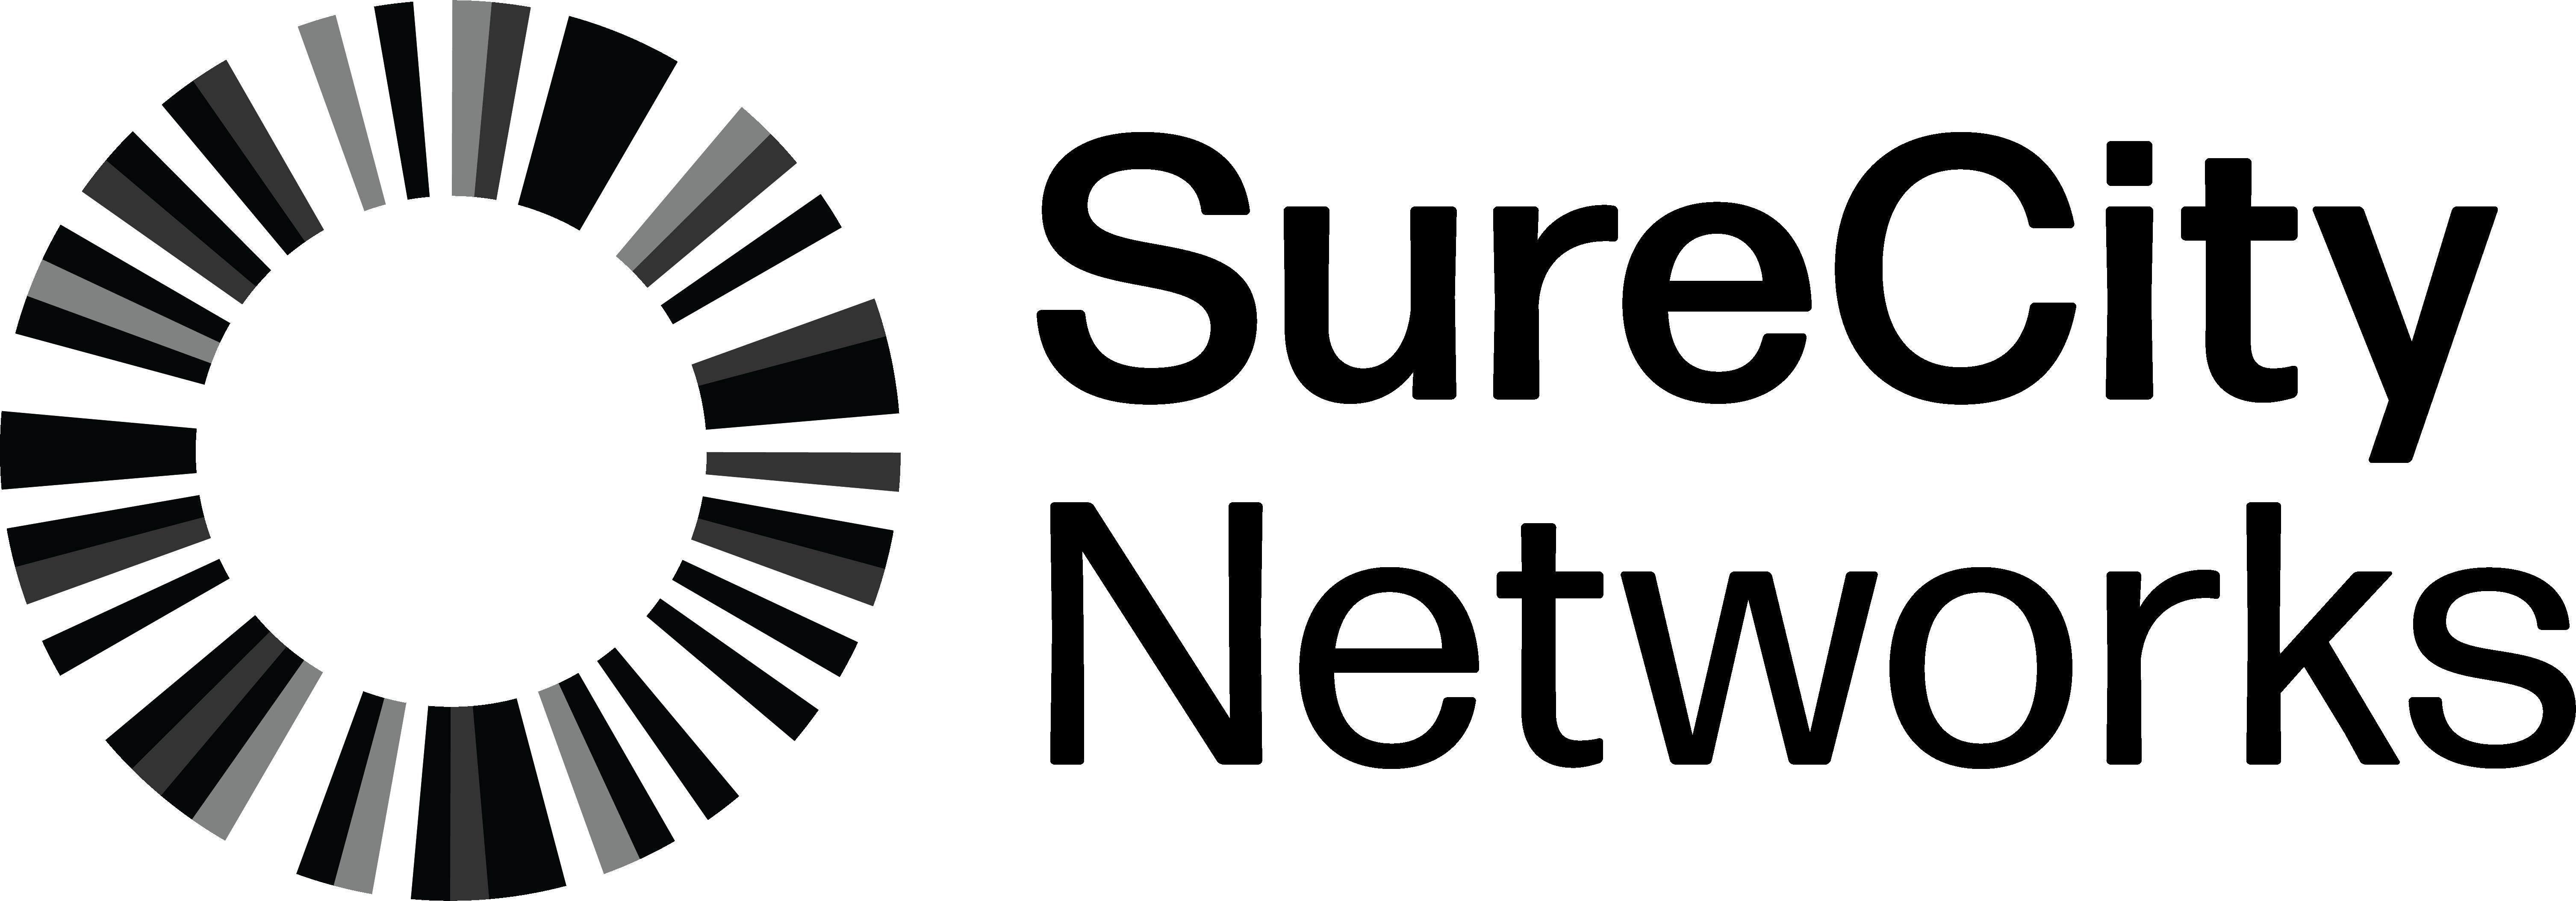 SureCity Networks logo